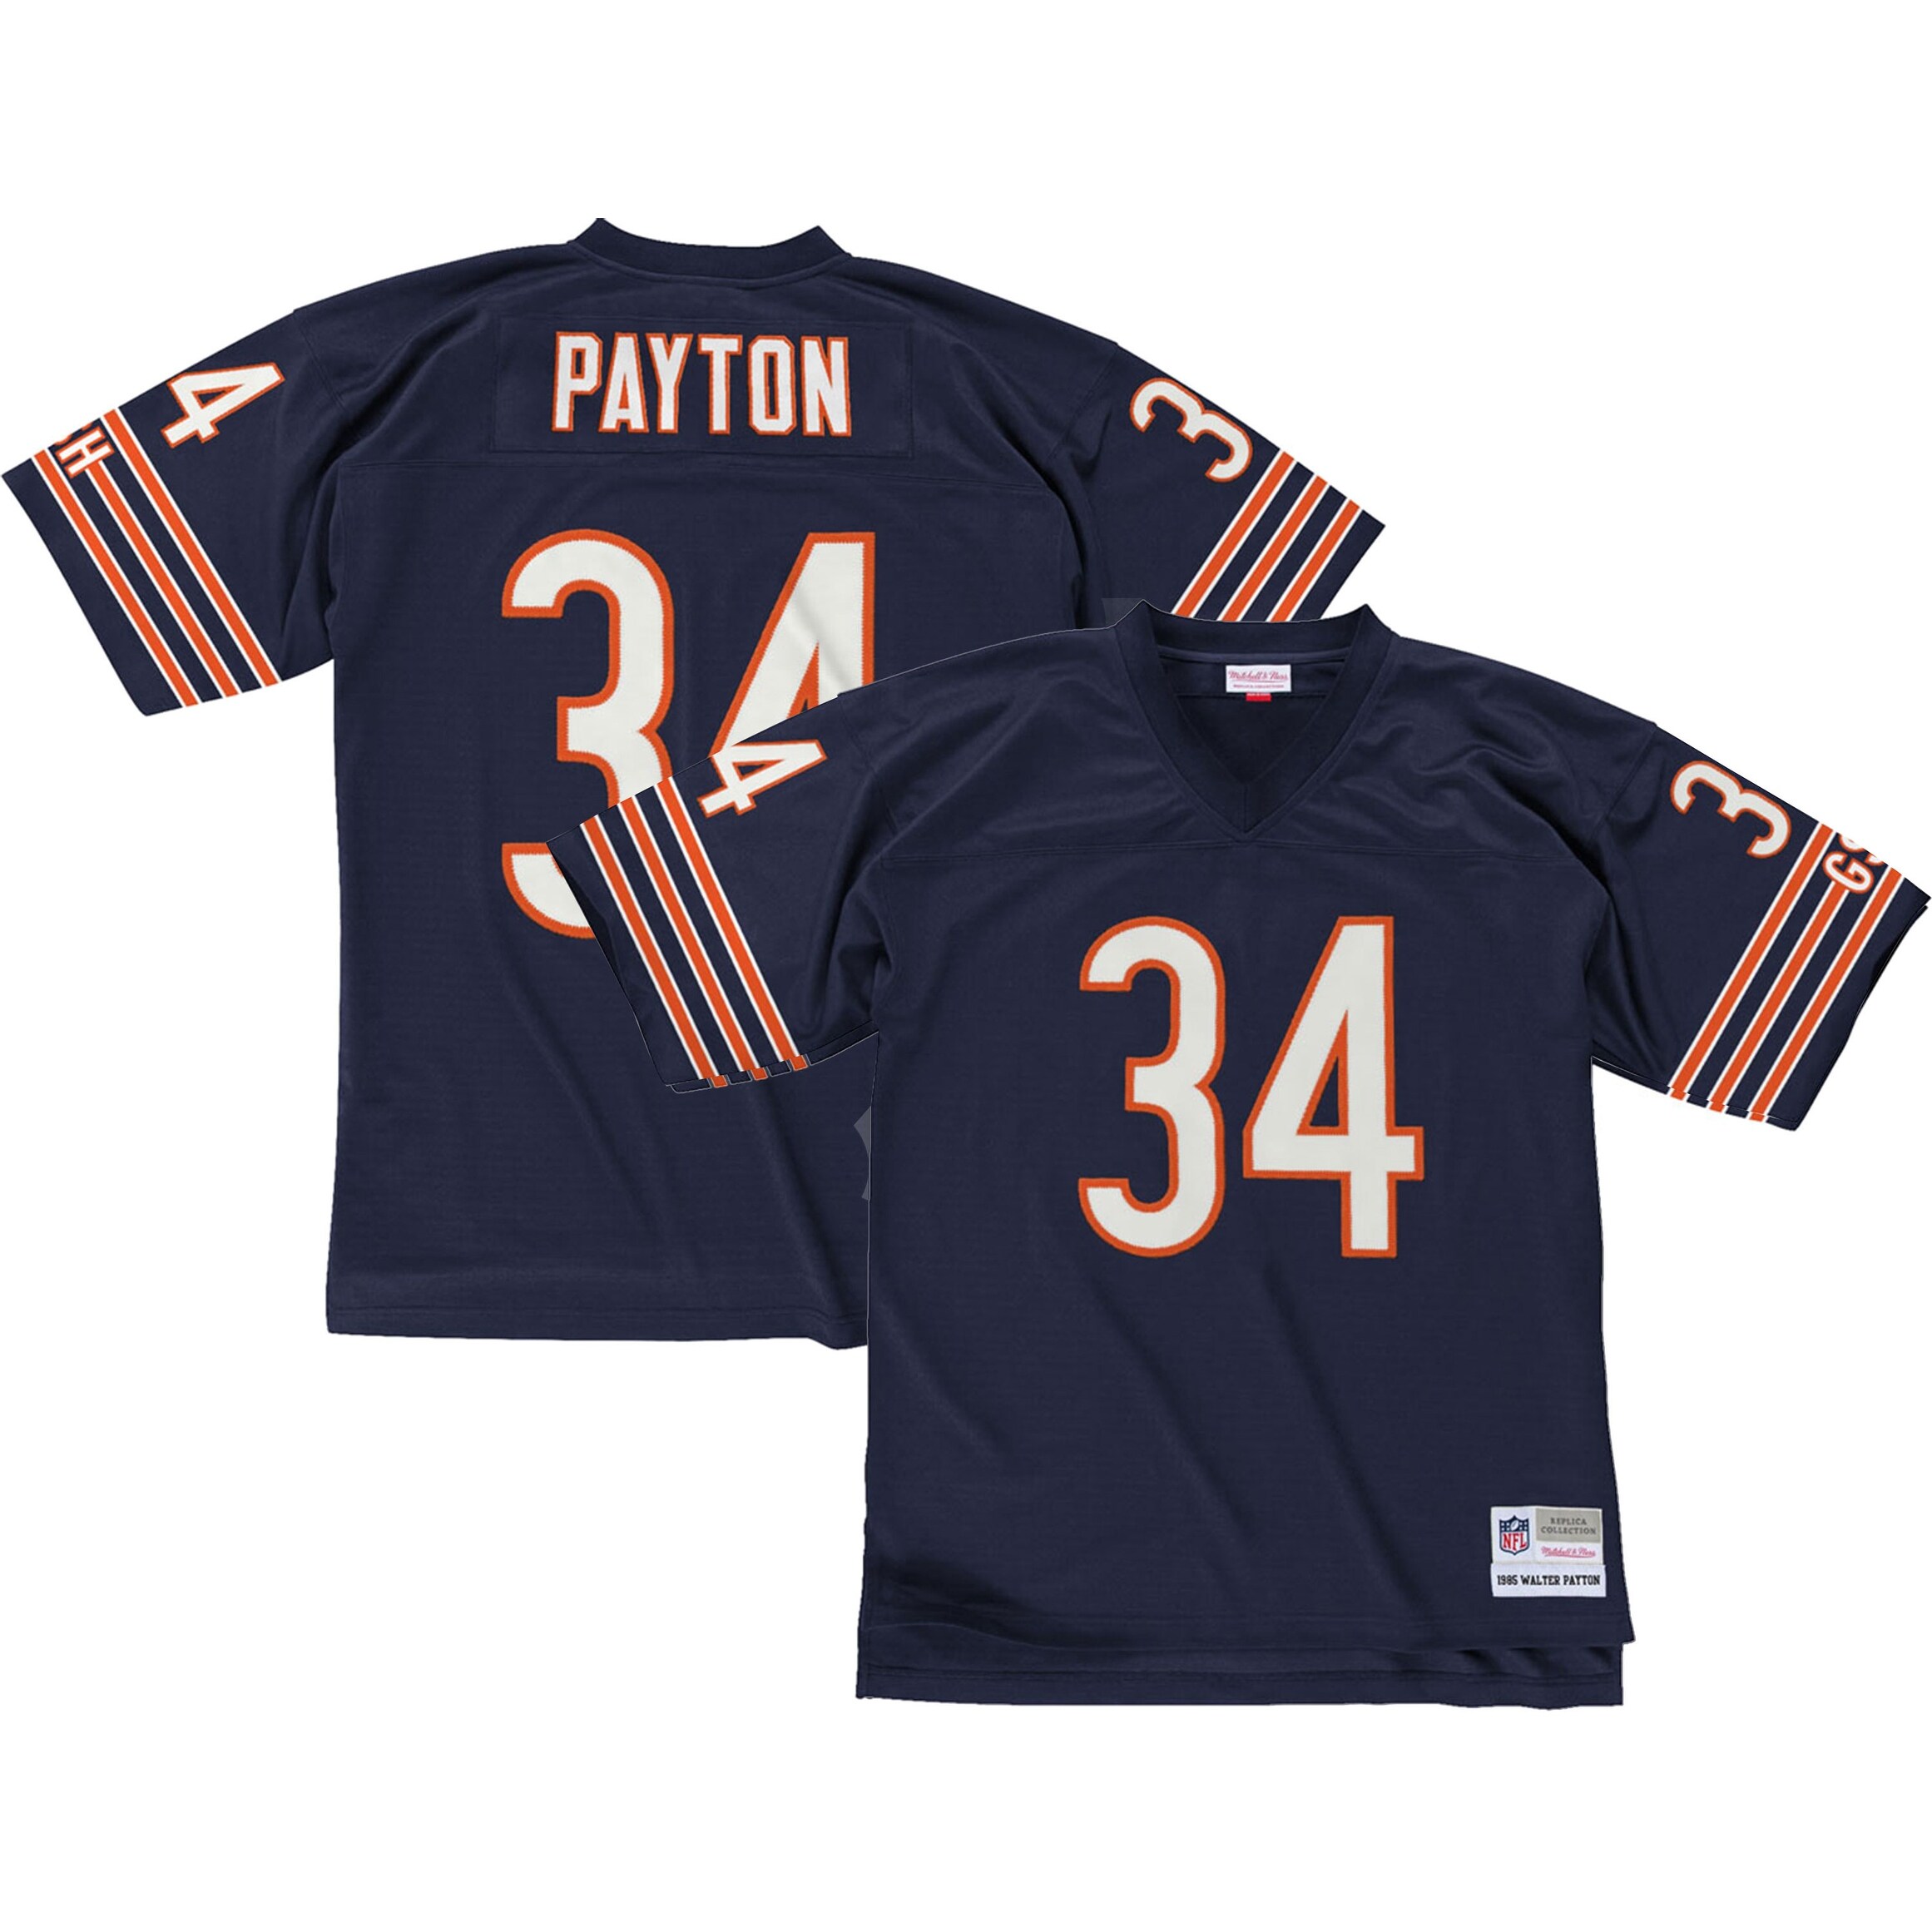 payton bears jersey